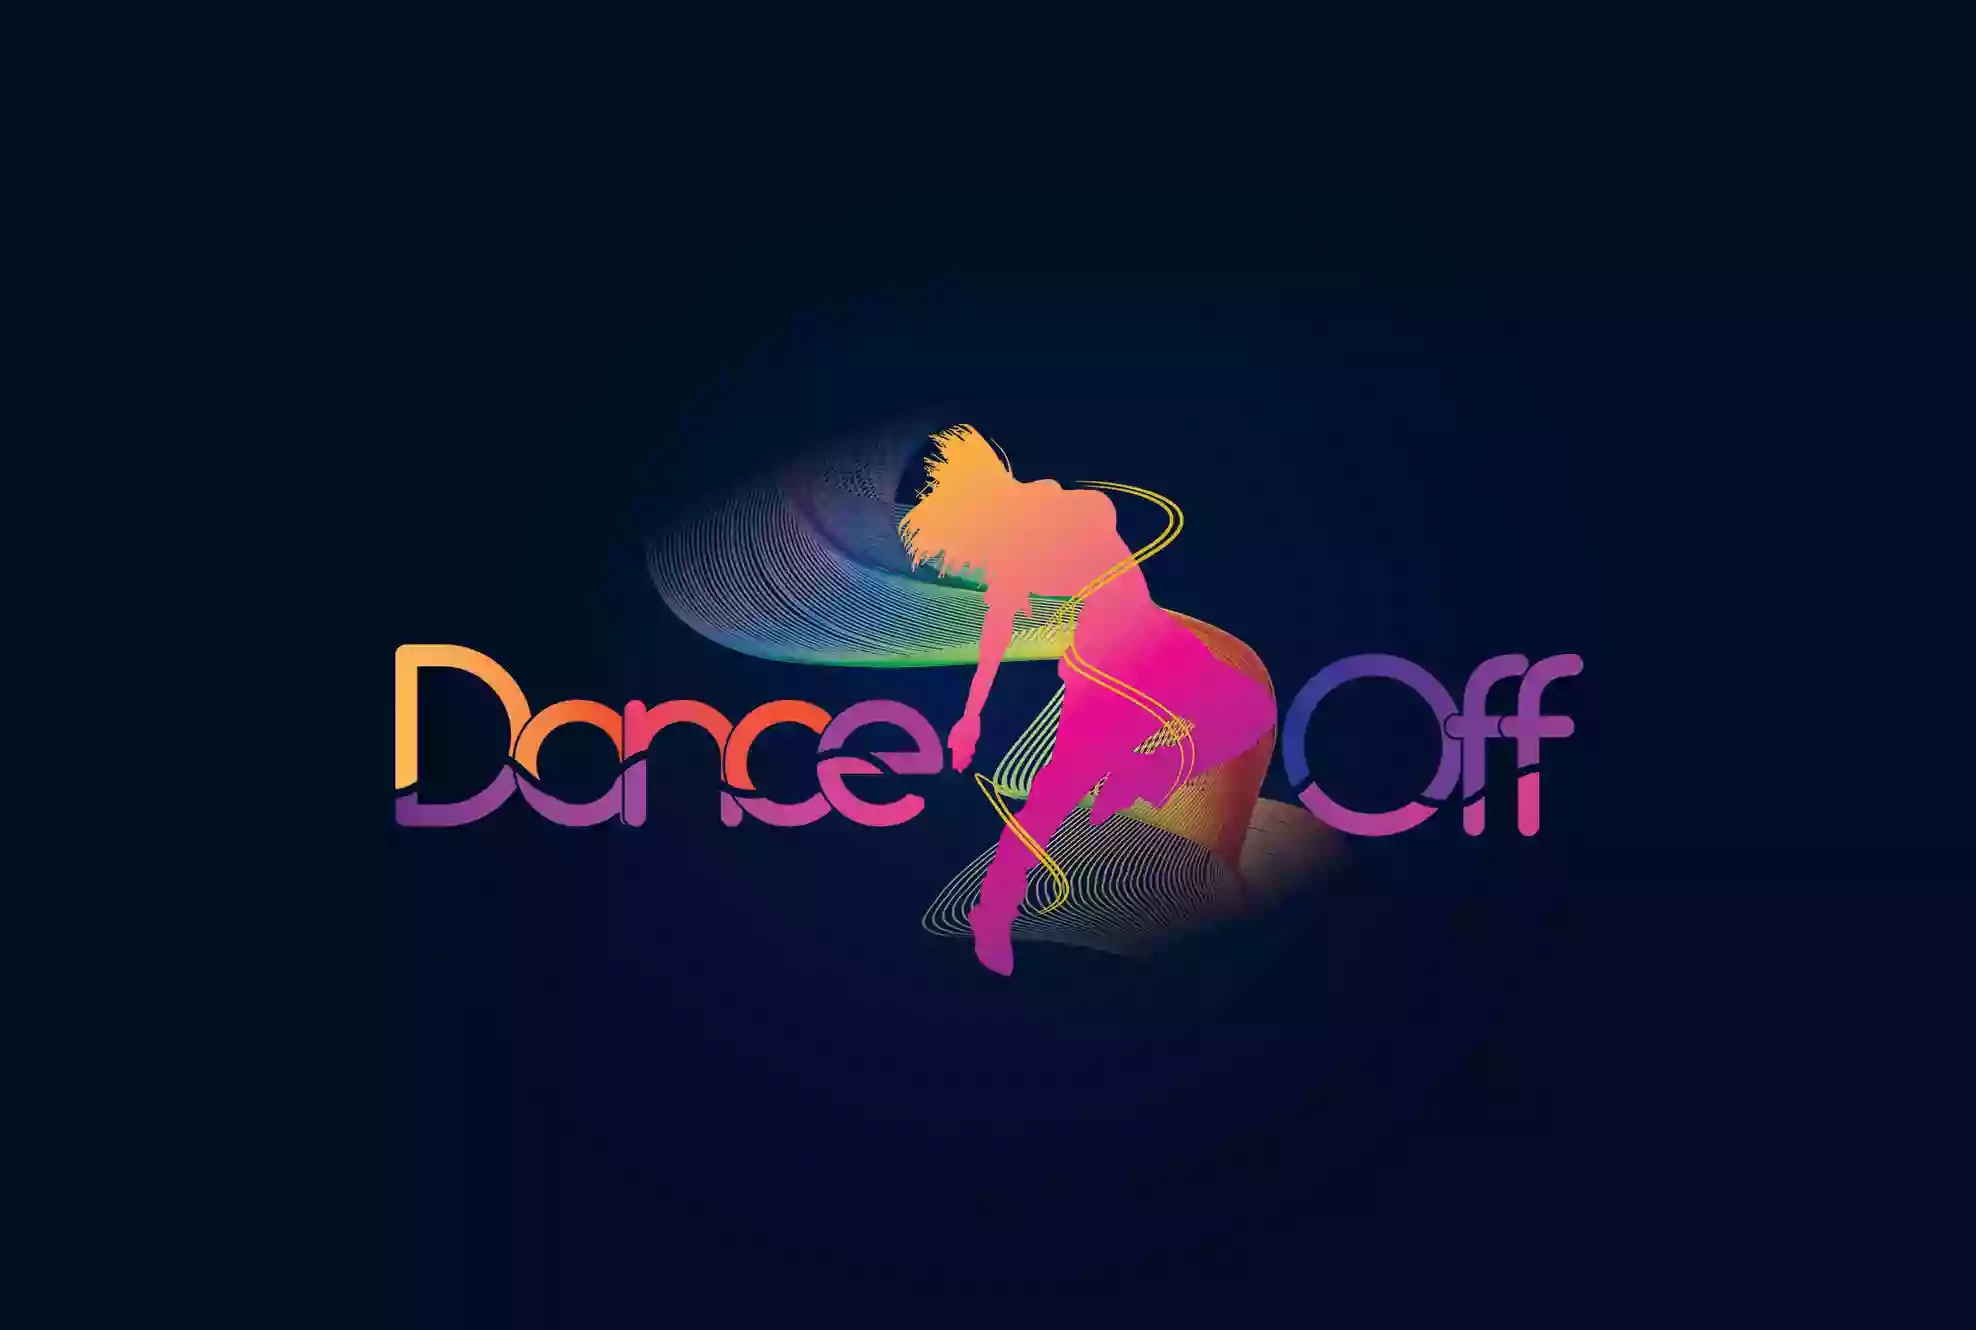 Dance Off